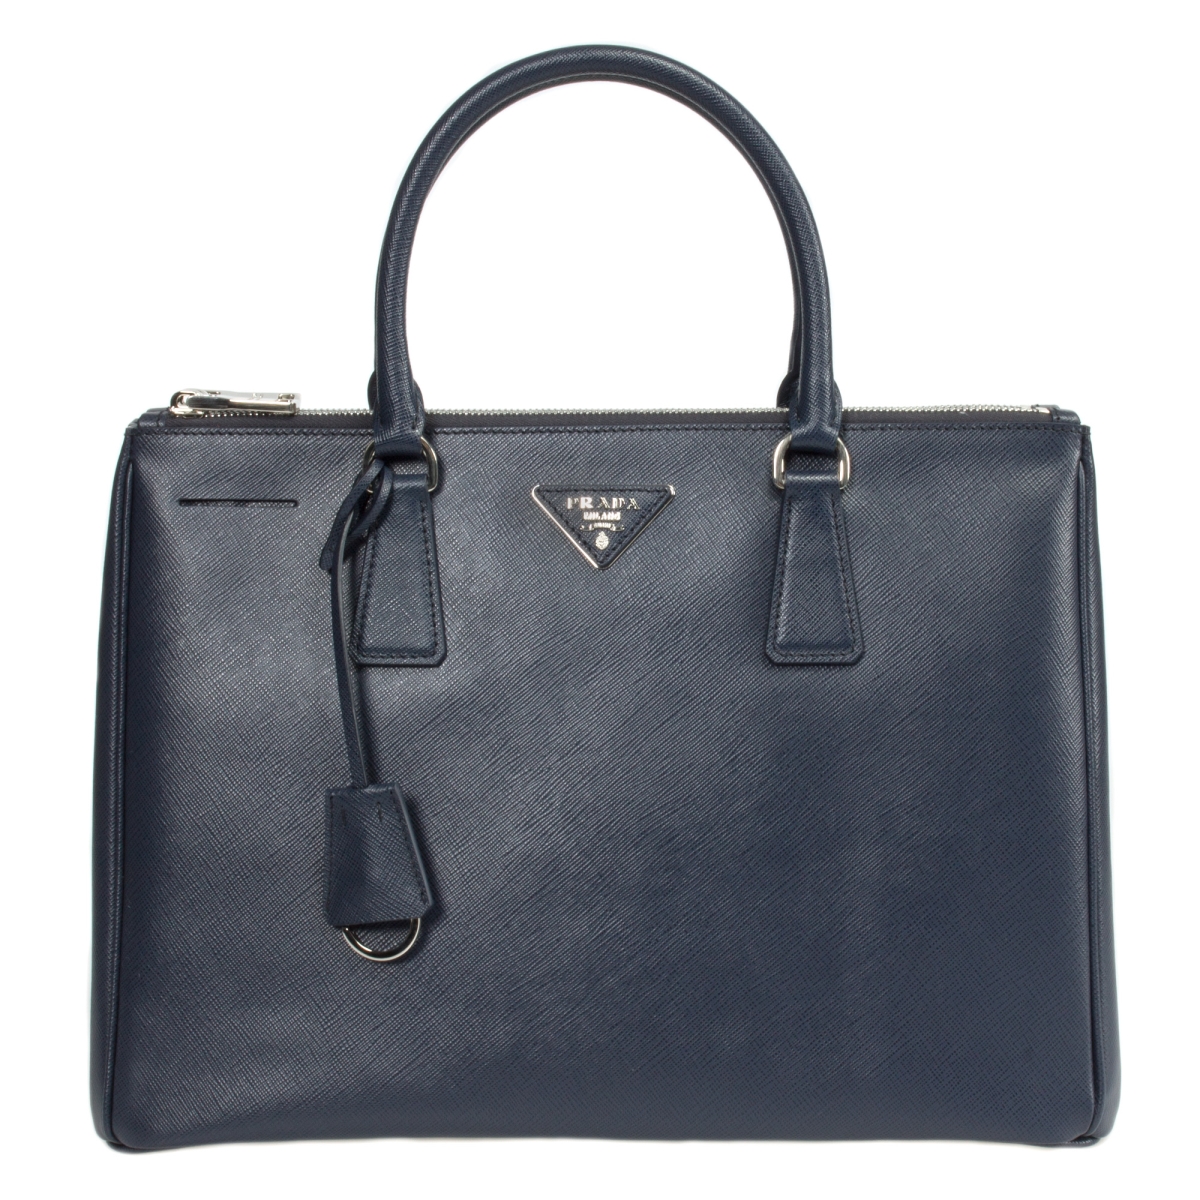 Prd-hbag-1ba274-f0dmh Galleria Saffiano Leather Bag With Silver Hardware, Navy